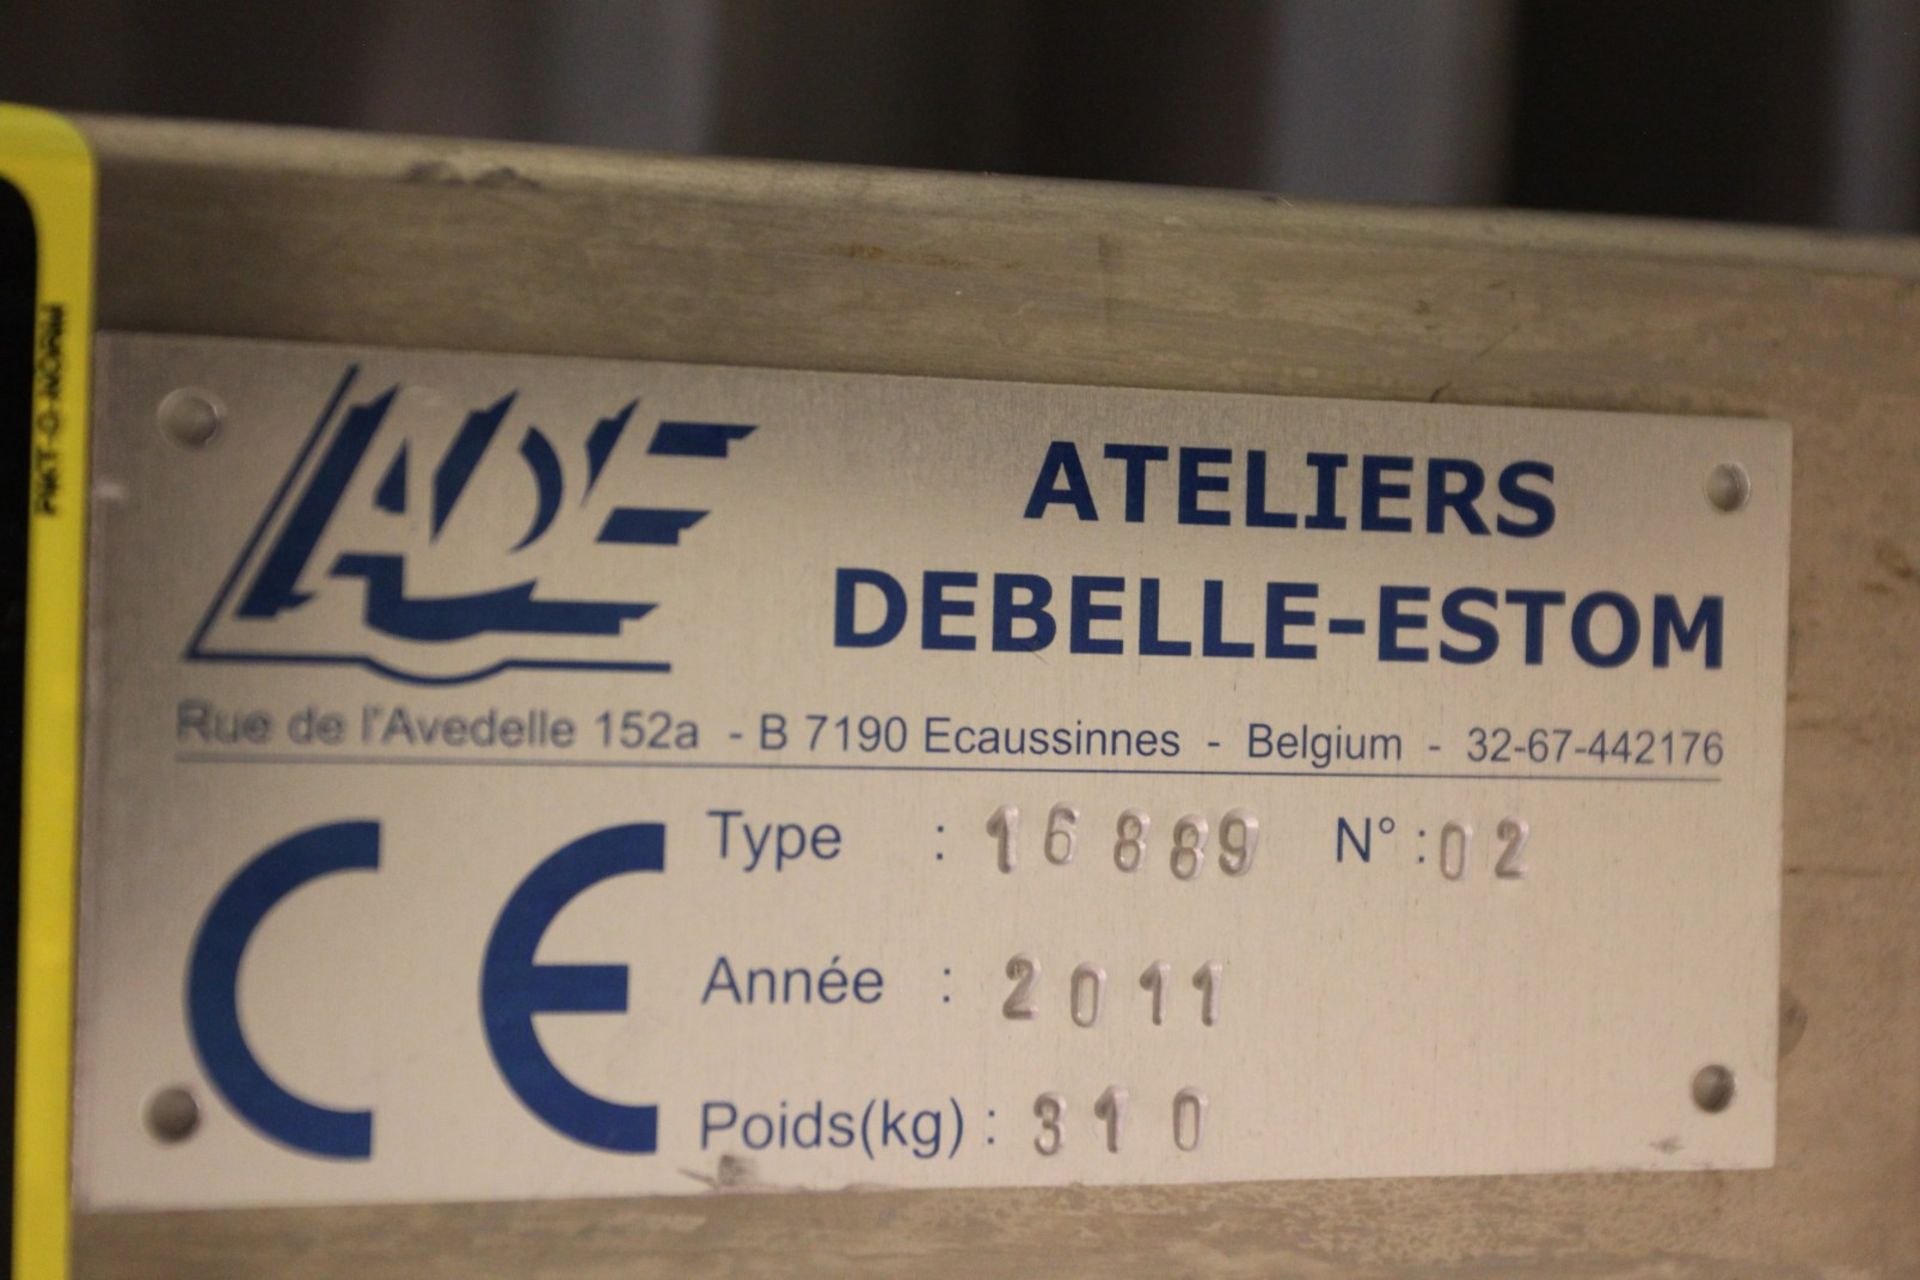 2011 ADE Ateliers Debelle-Estom 16889 Mobile Electric Lift Table, s/n 02 - Bild 4 aus 4